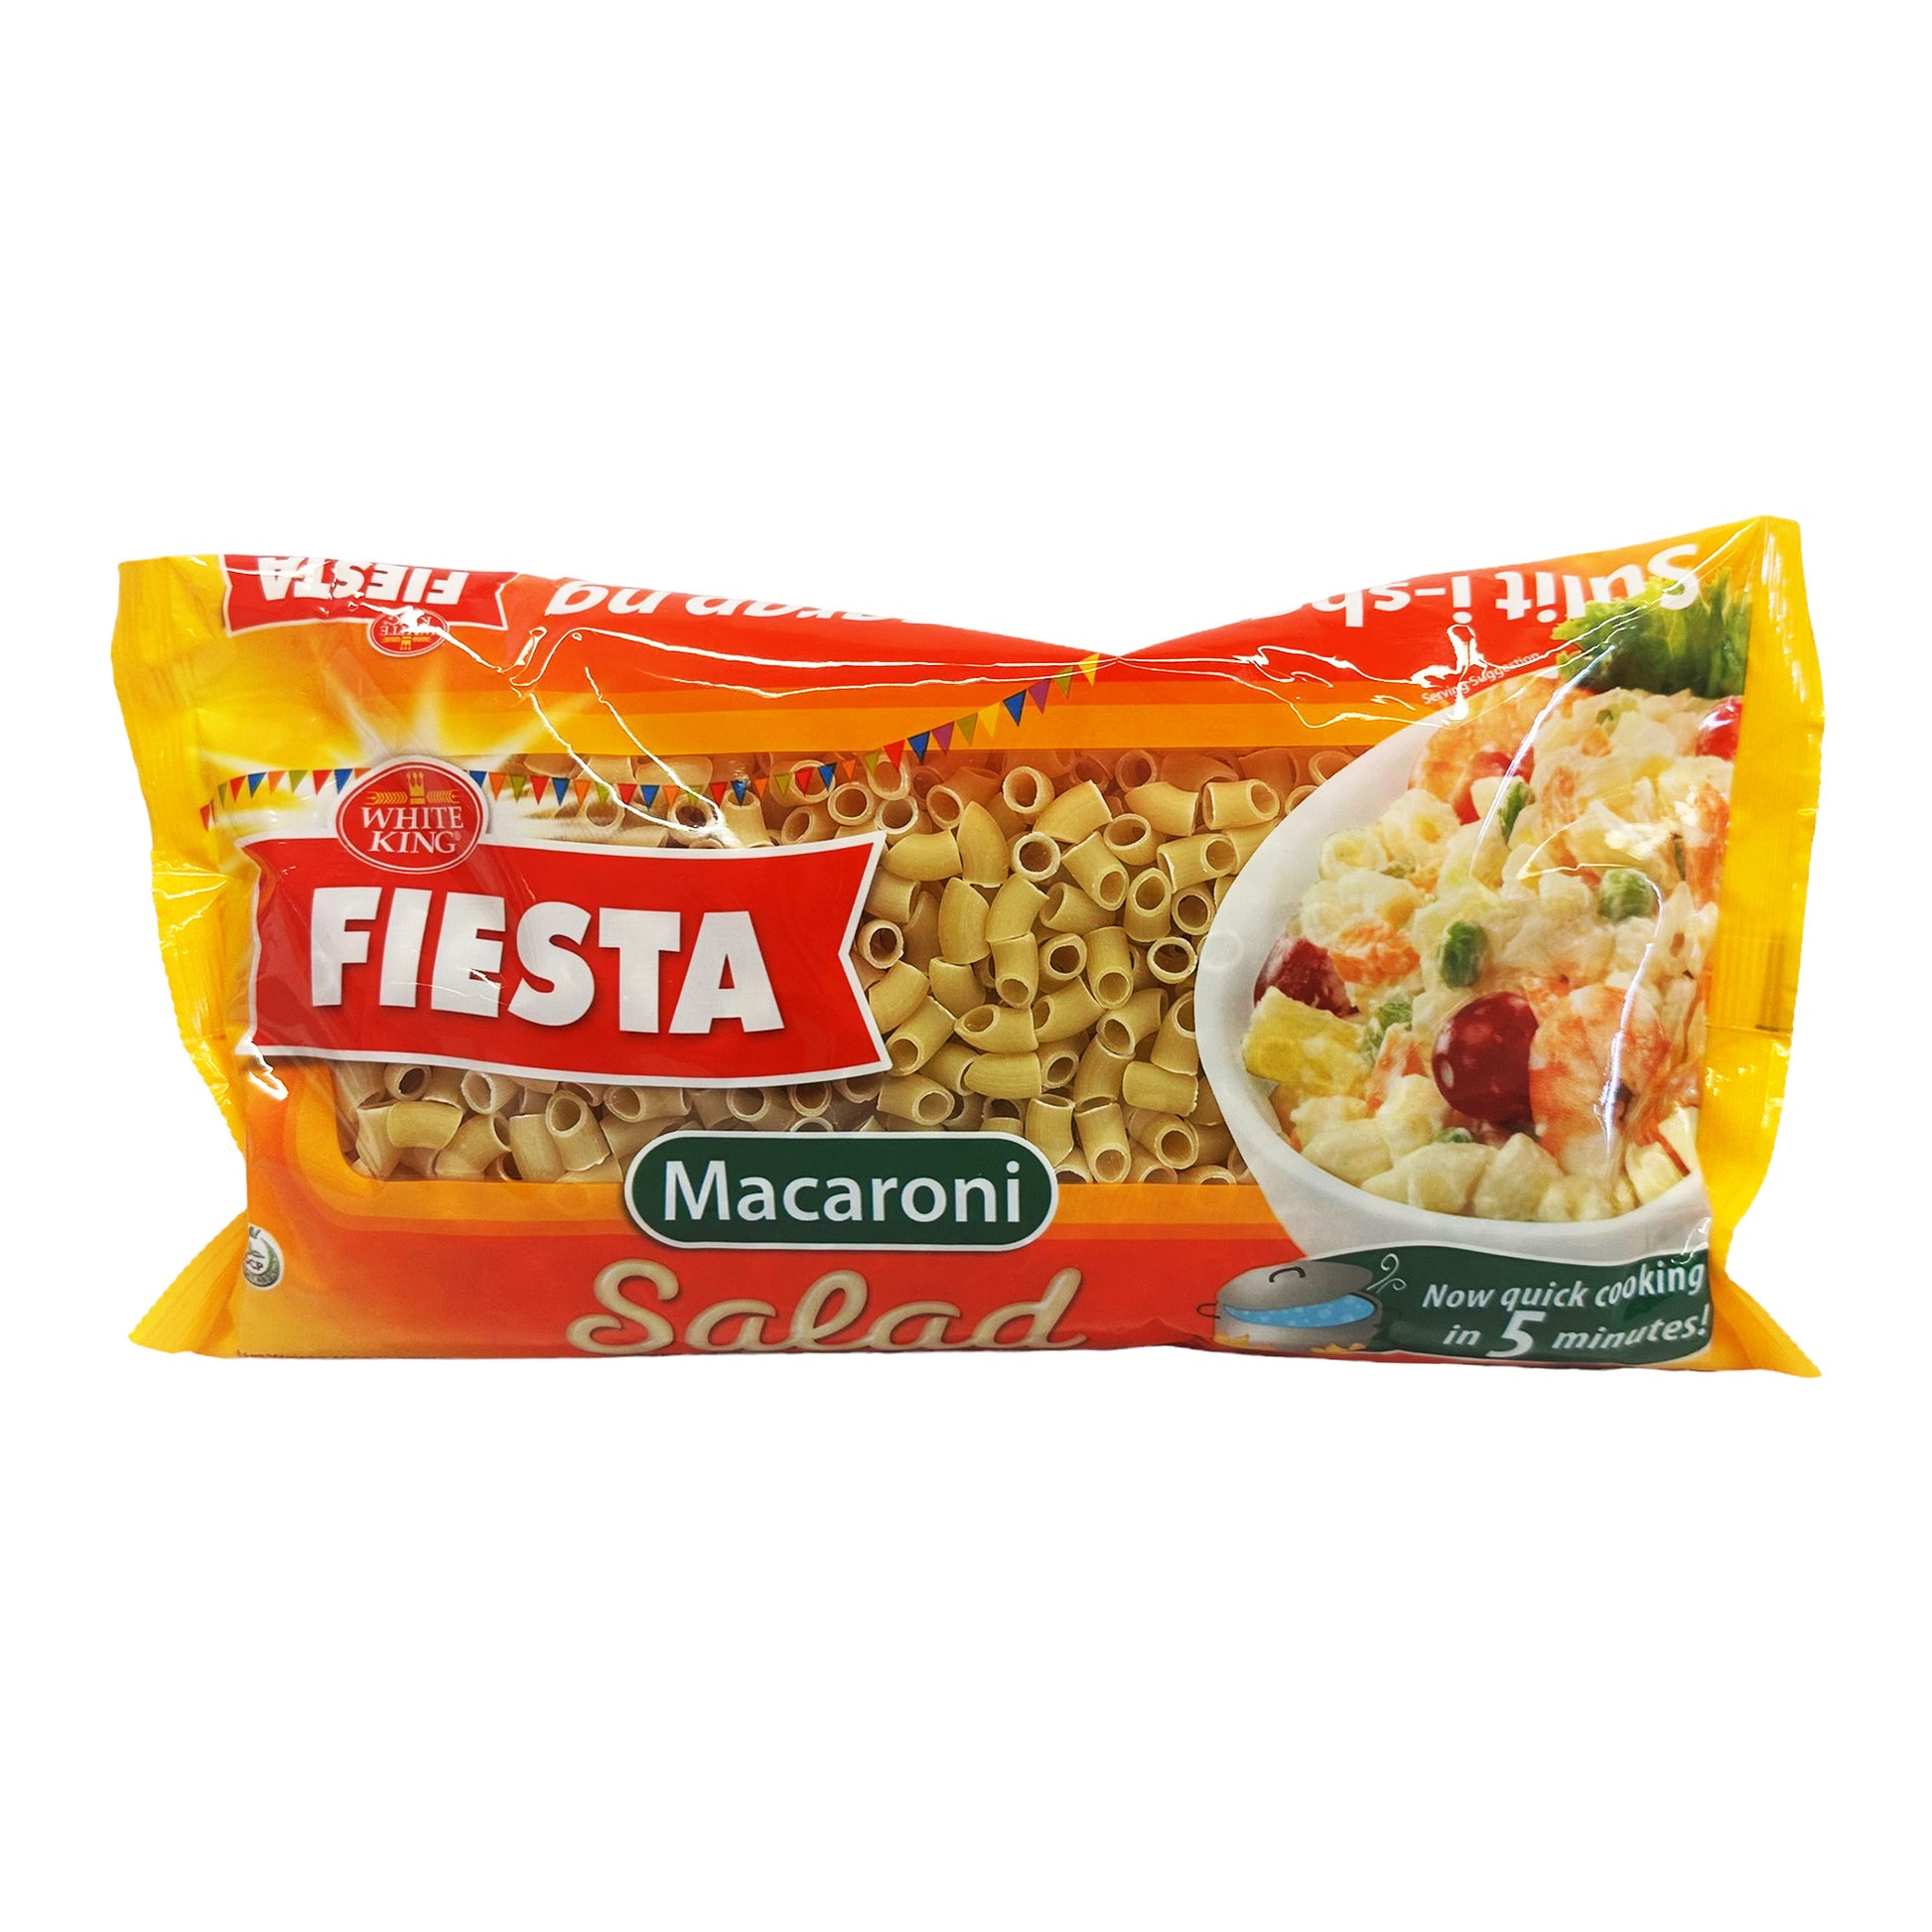 Front graphic image of White King Fiesta Salad Macaroni 14.1oz (400g)